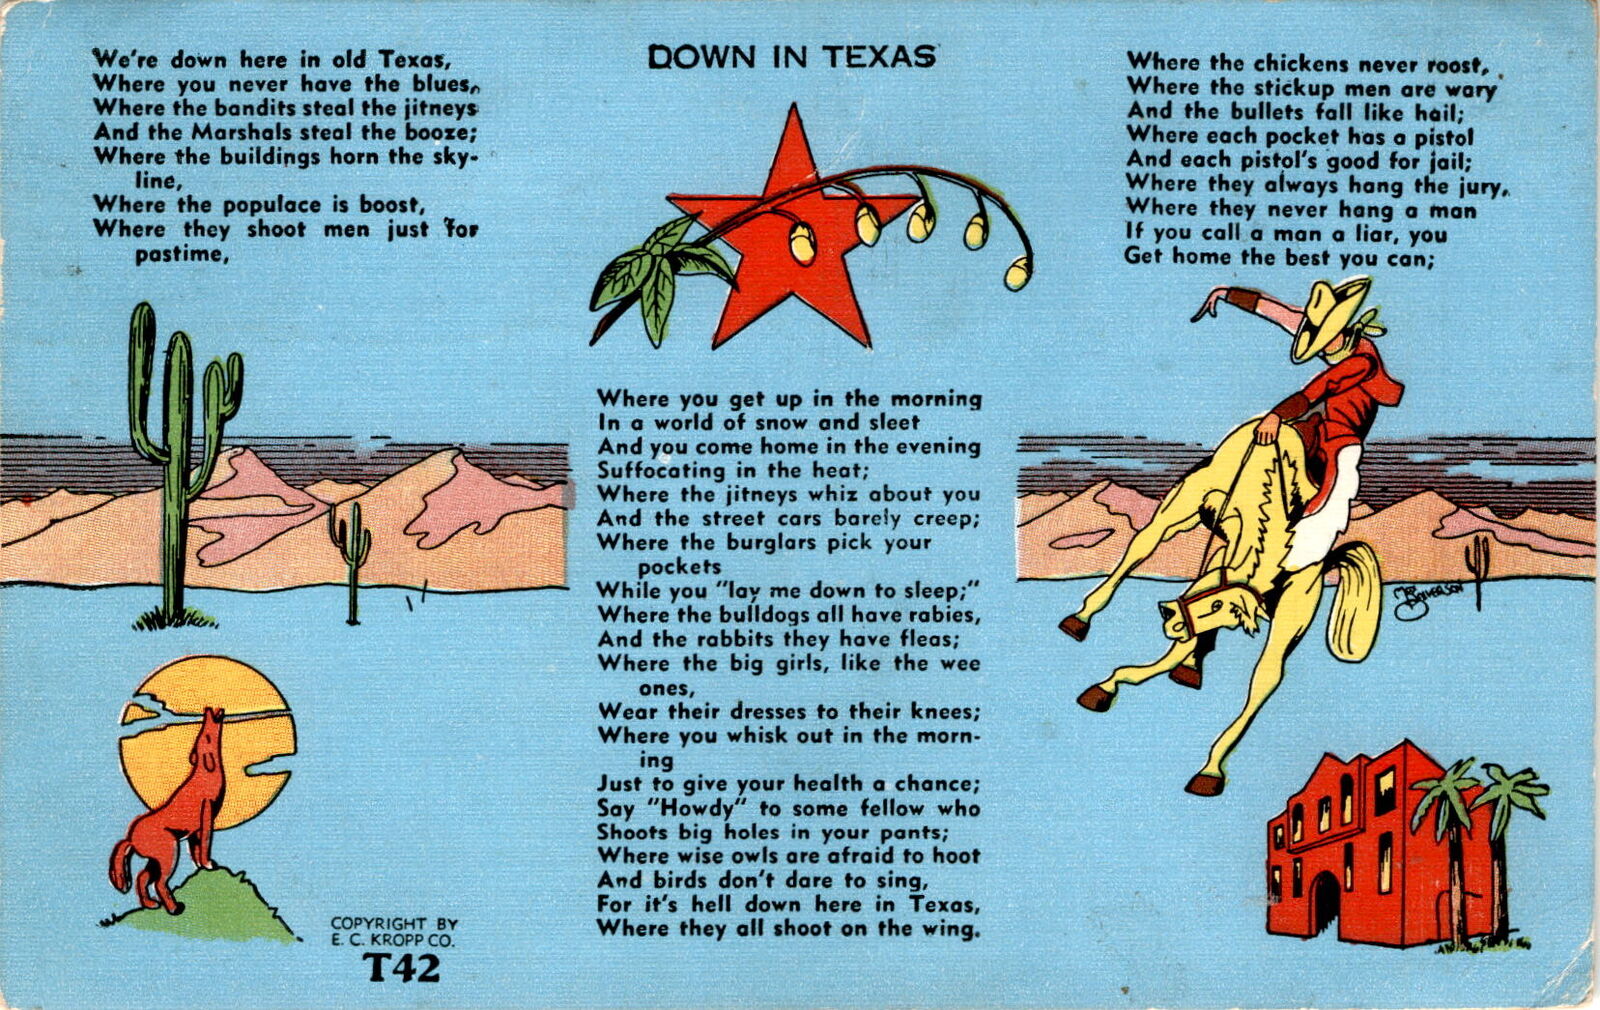 Texas, bandits, marshals, skyline, shootings, hot weather, pistols, Postcard